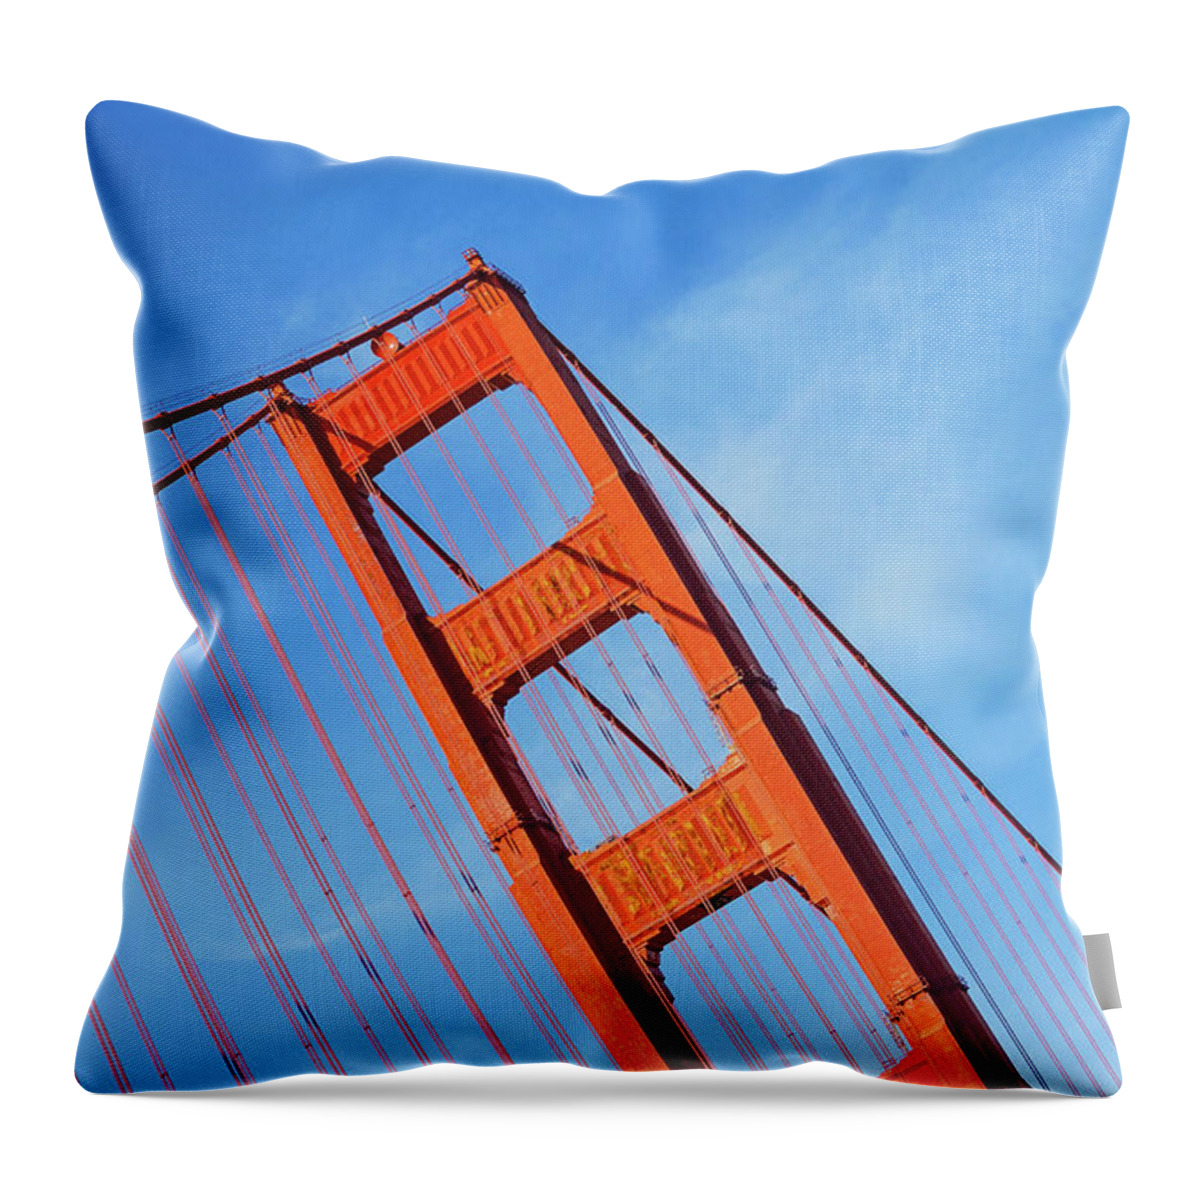 Golden Gate Bridge Throw Pillow featuring the photograph Towering Golden Gate by Melanie Alexandra Price